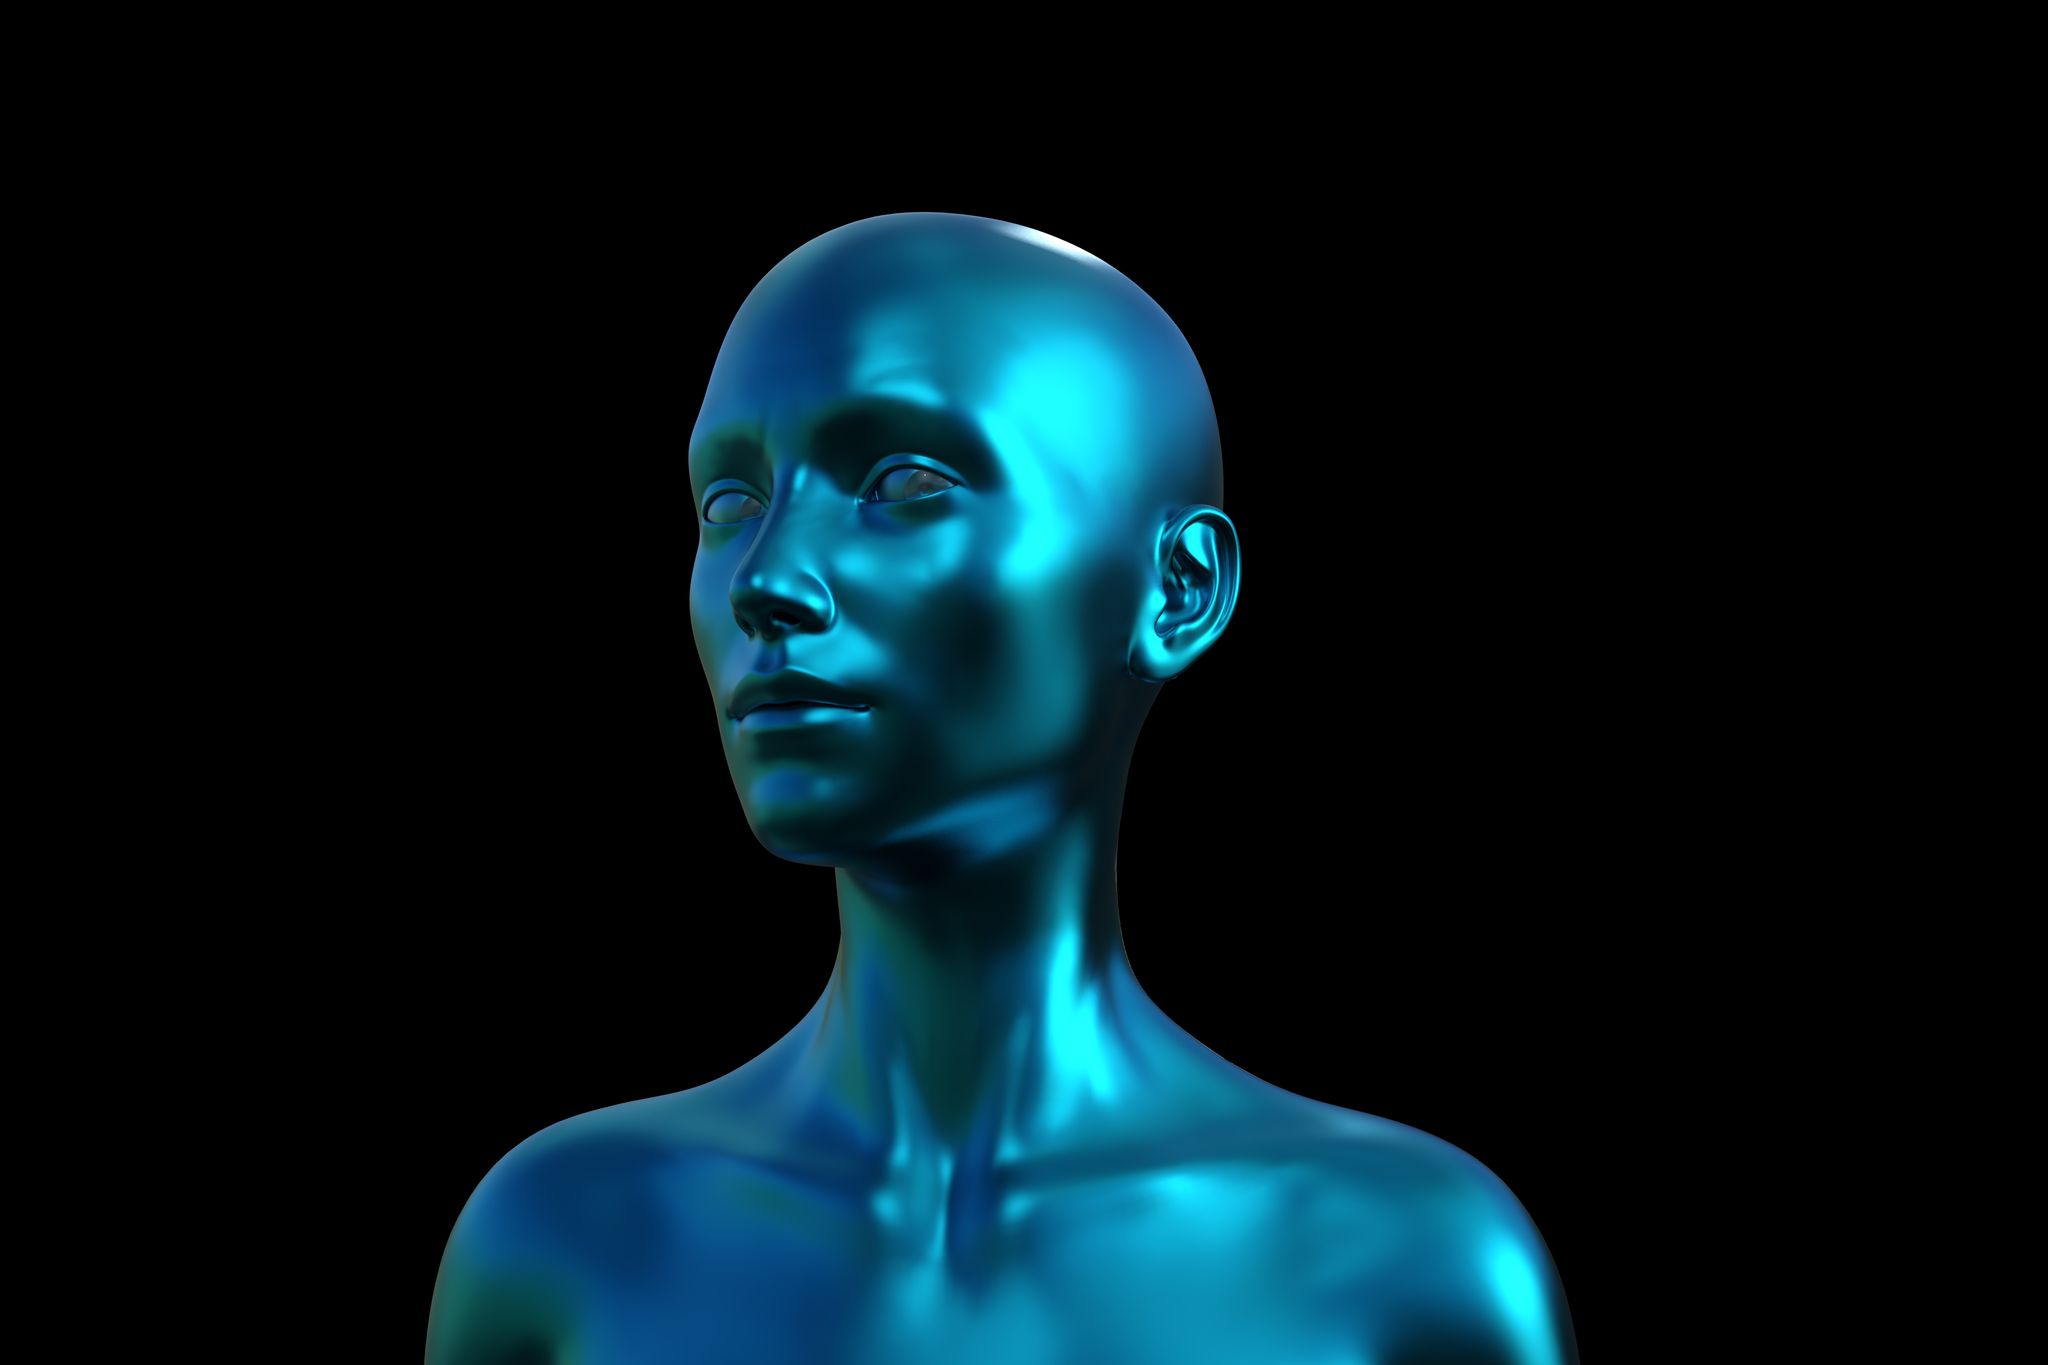 3d illustration portrait of a blue bald woman on a black background